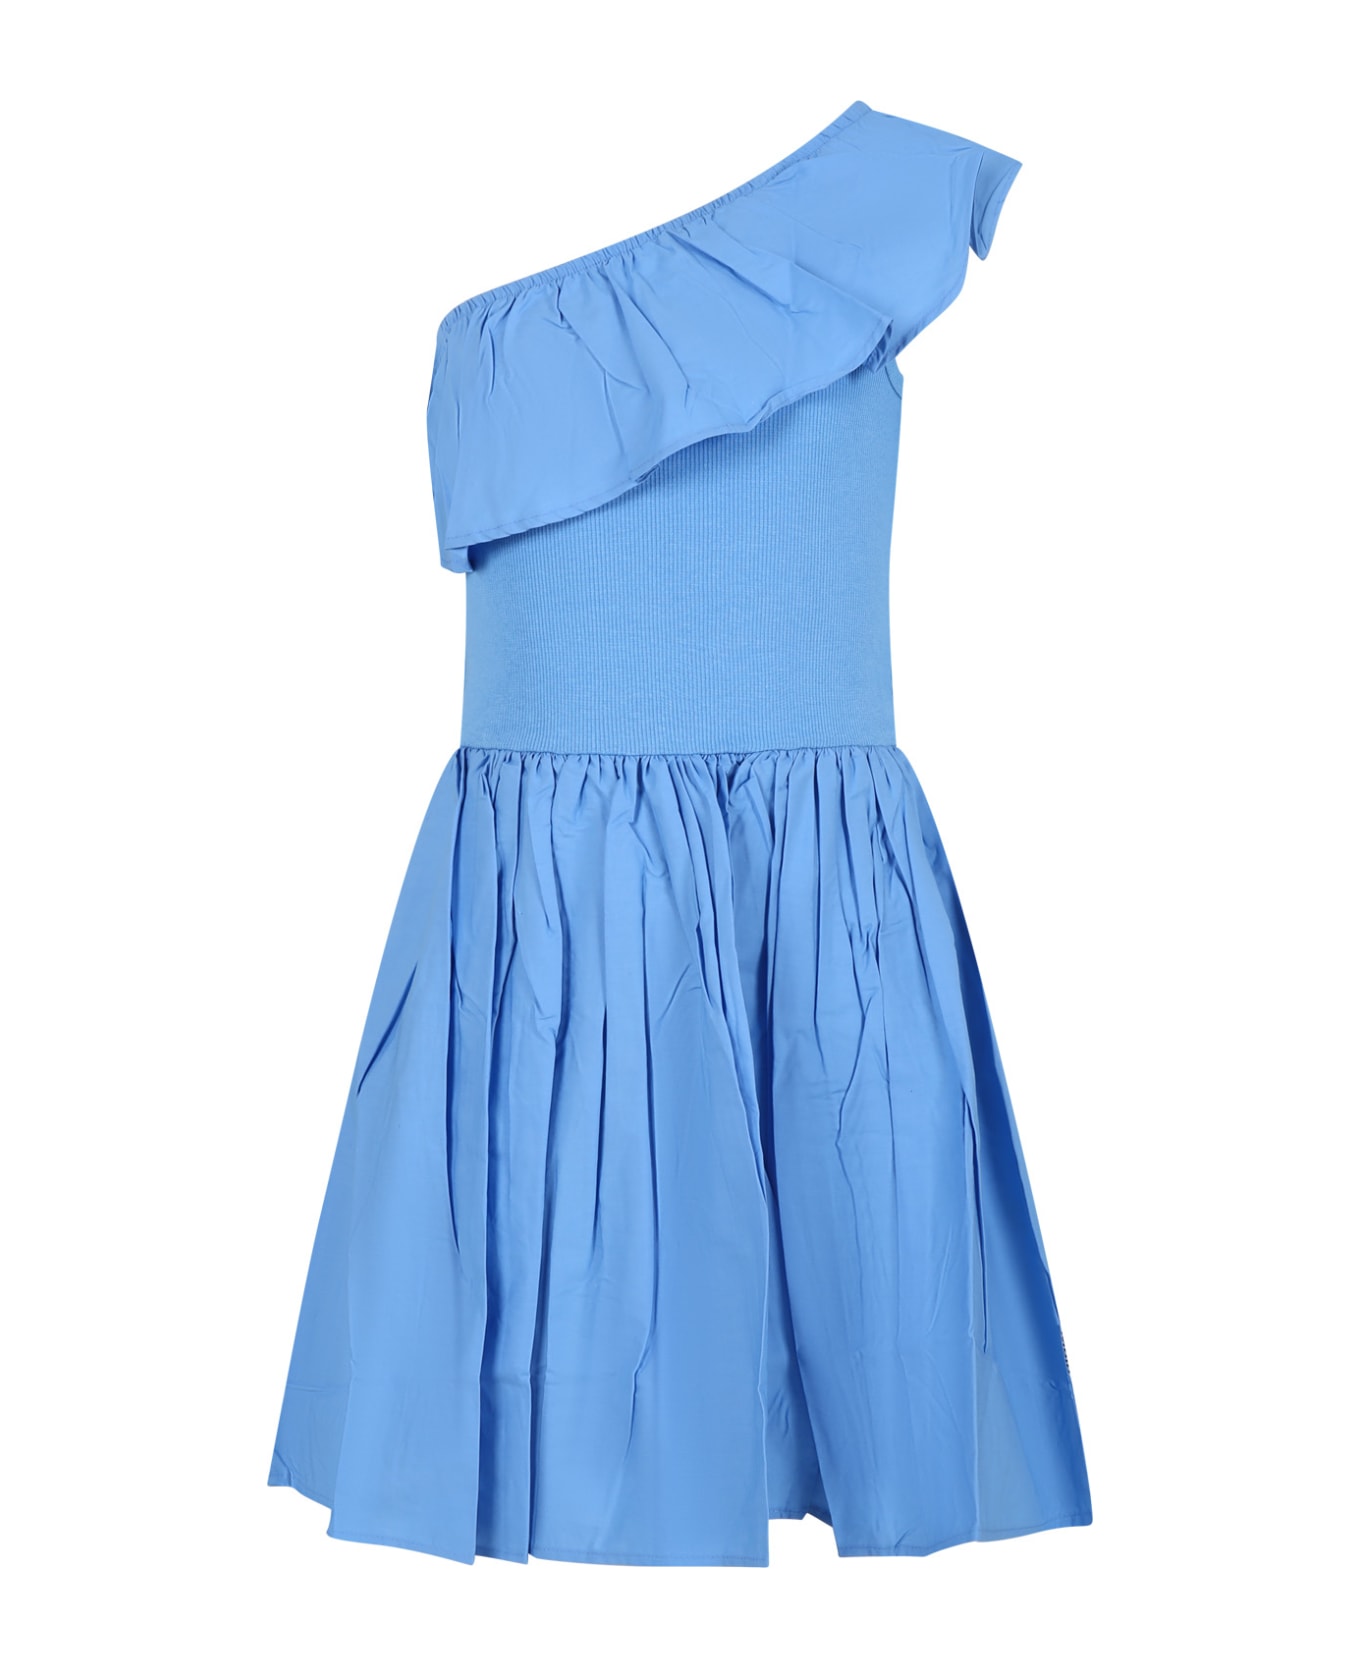 Molo Casual Light Blue Dress For Girl - Light Blue